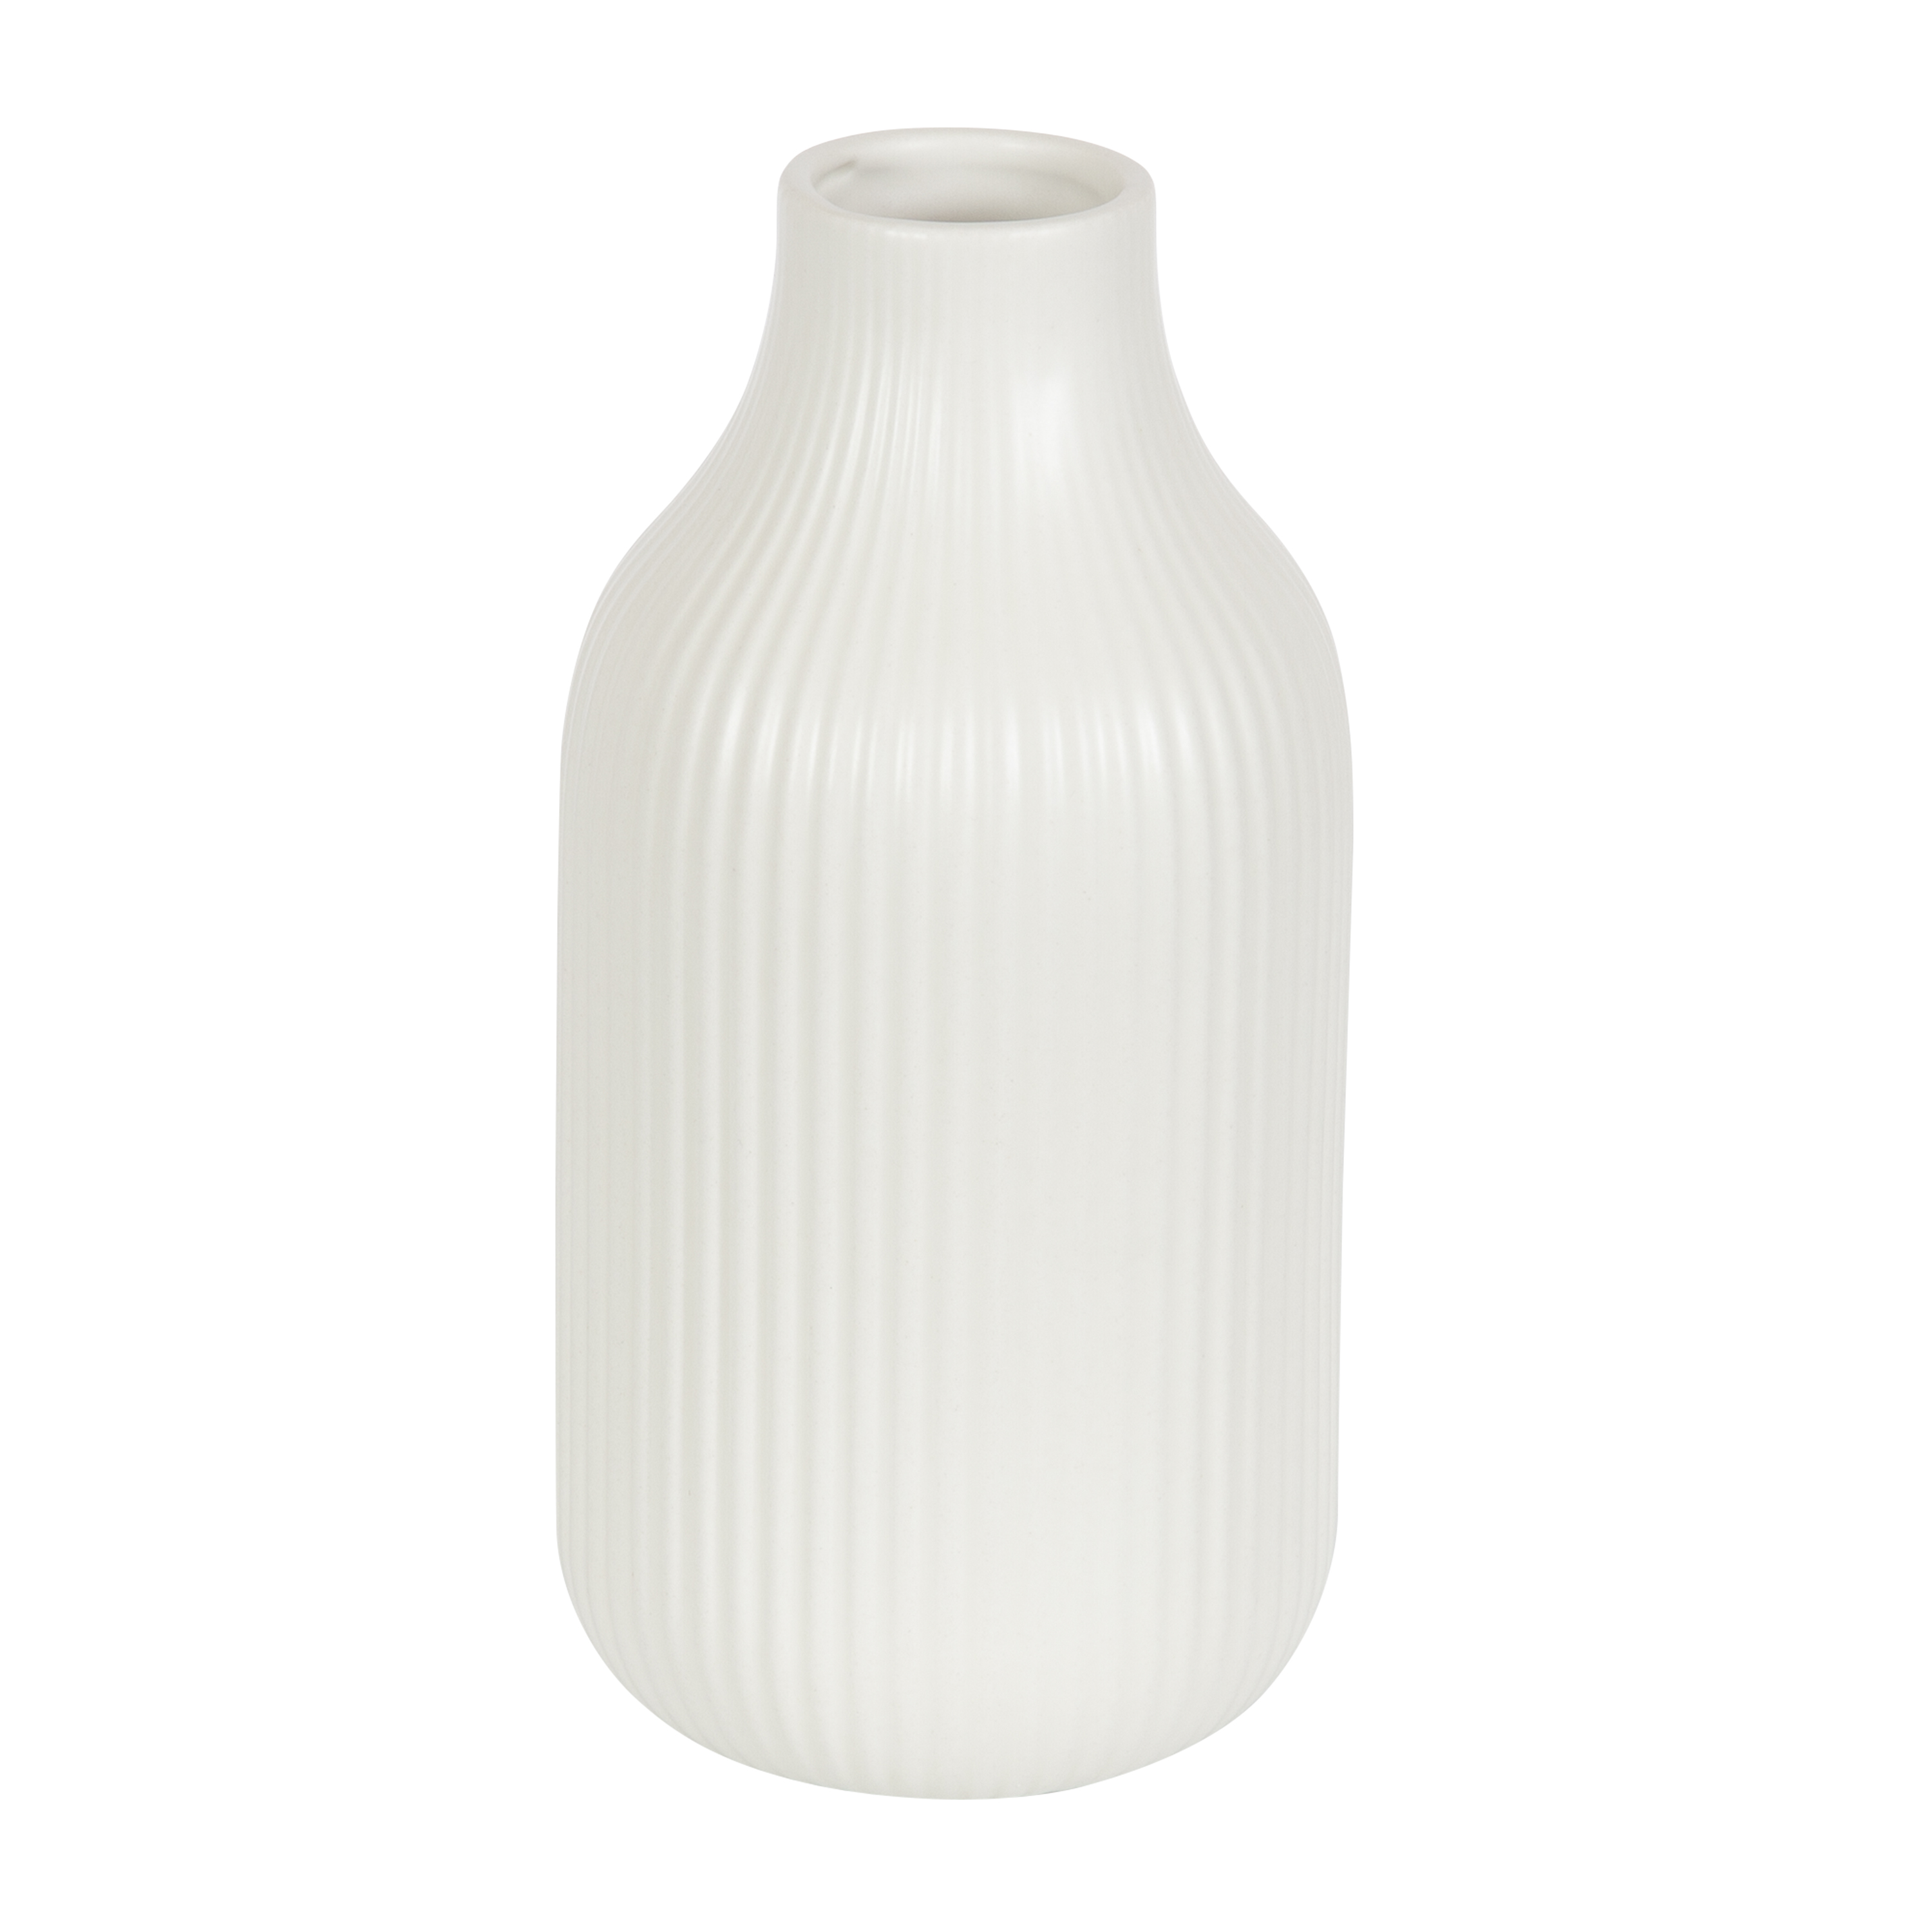 Better Homes & Gardens 8.5 inch Ribbed Cream Ceramic Vase, Size: 8.50 inch